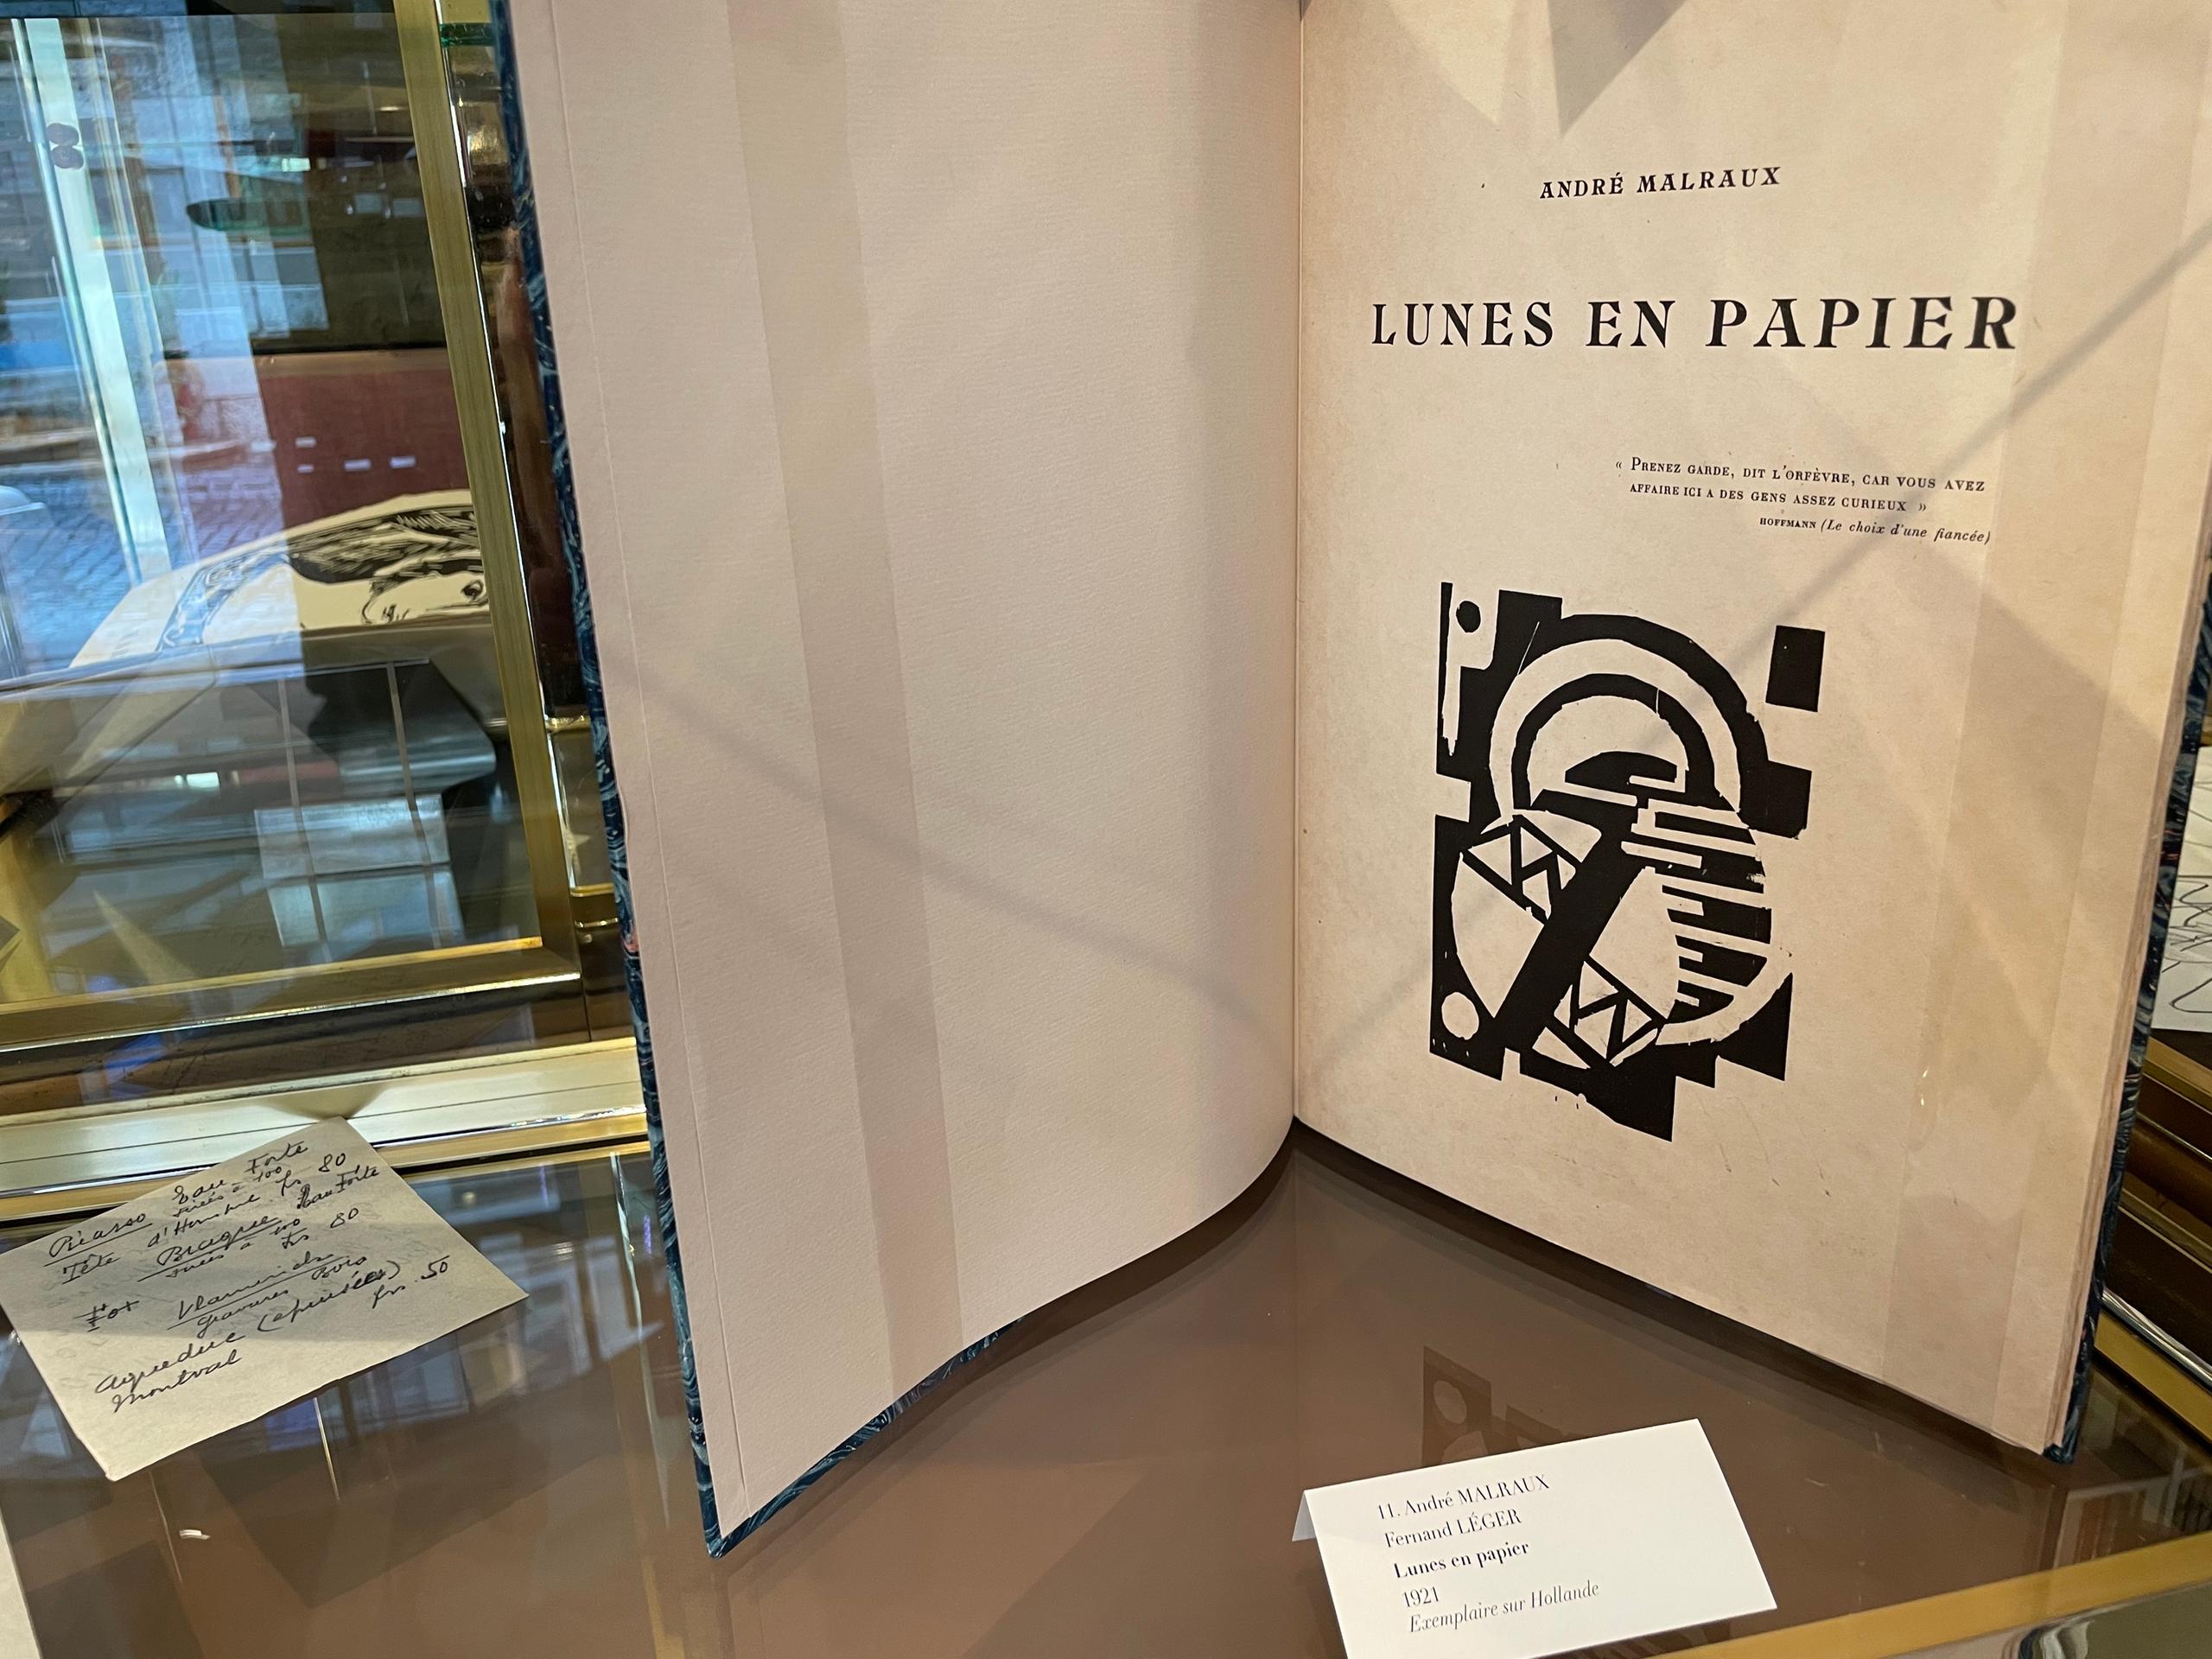 Librfo raro de André Malraux en exhibición